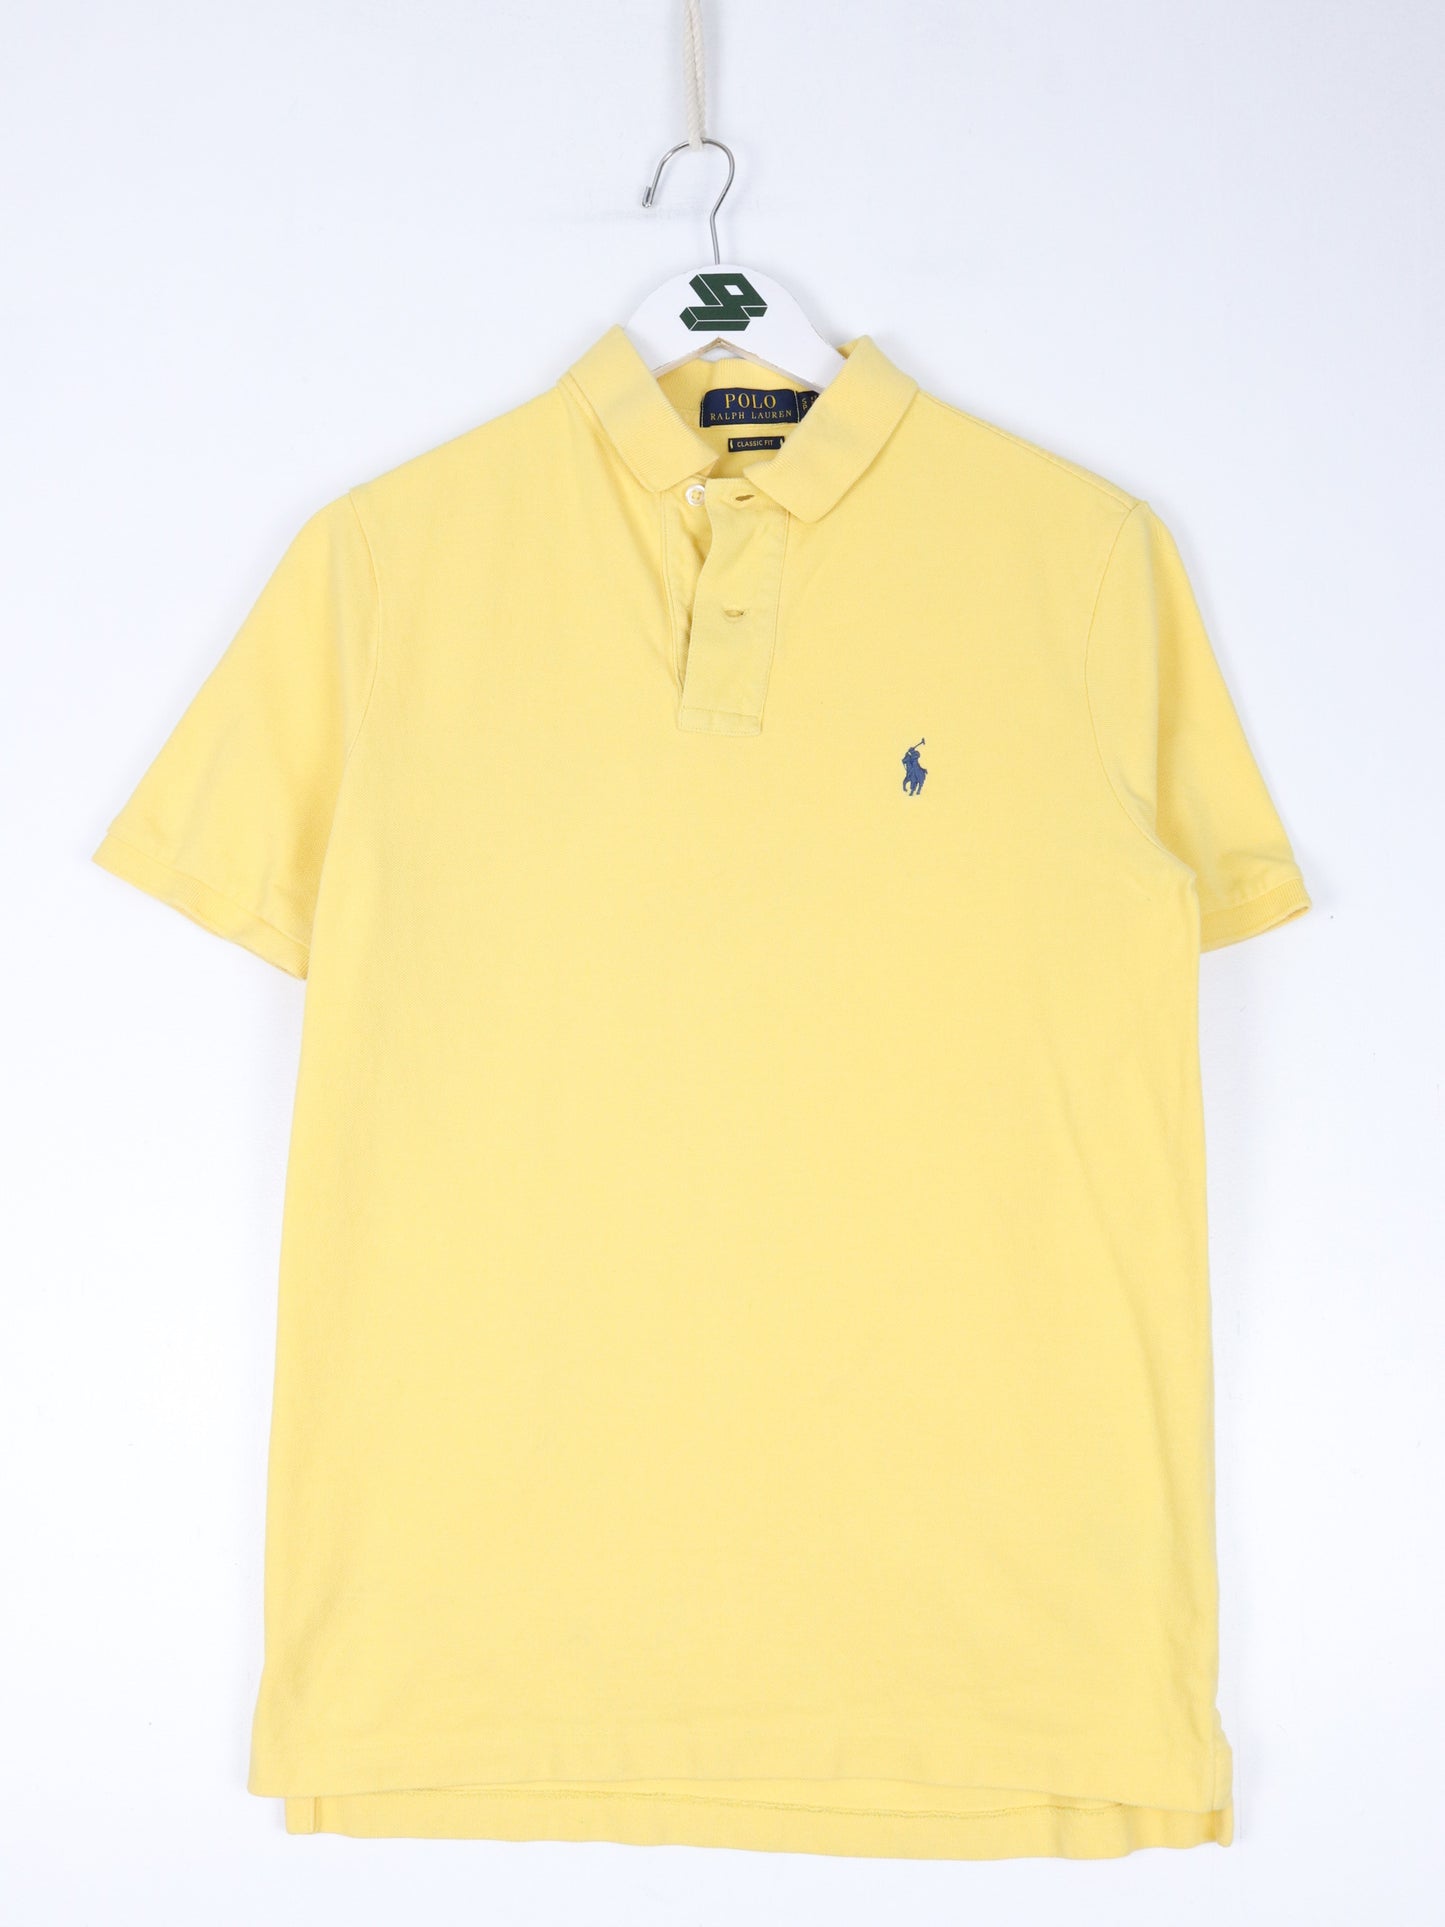 Ralph Lauren Polo Shirt Mens Small Yellow Pony Casual